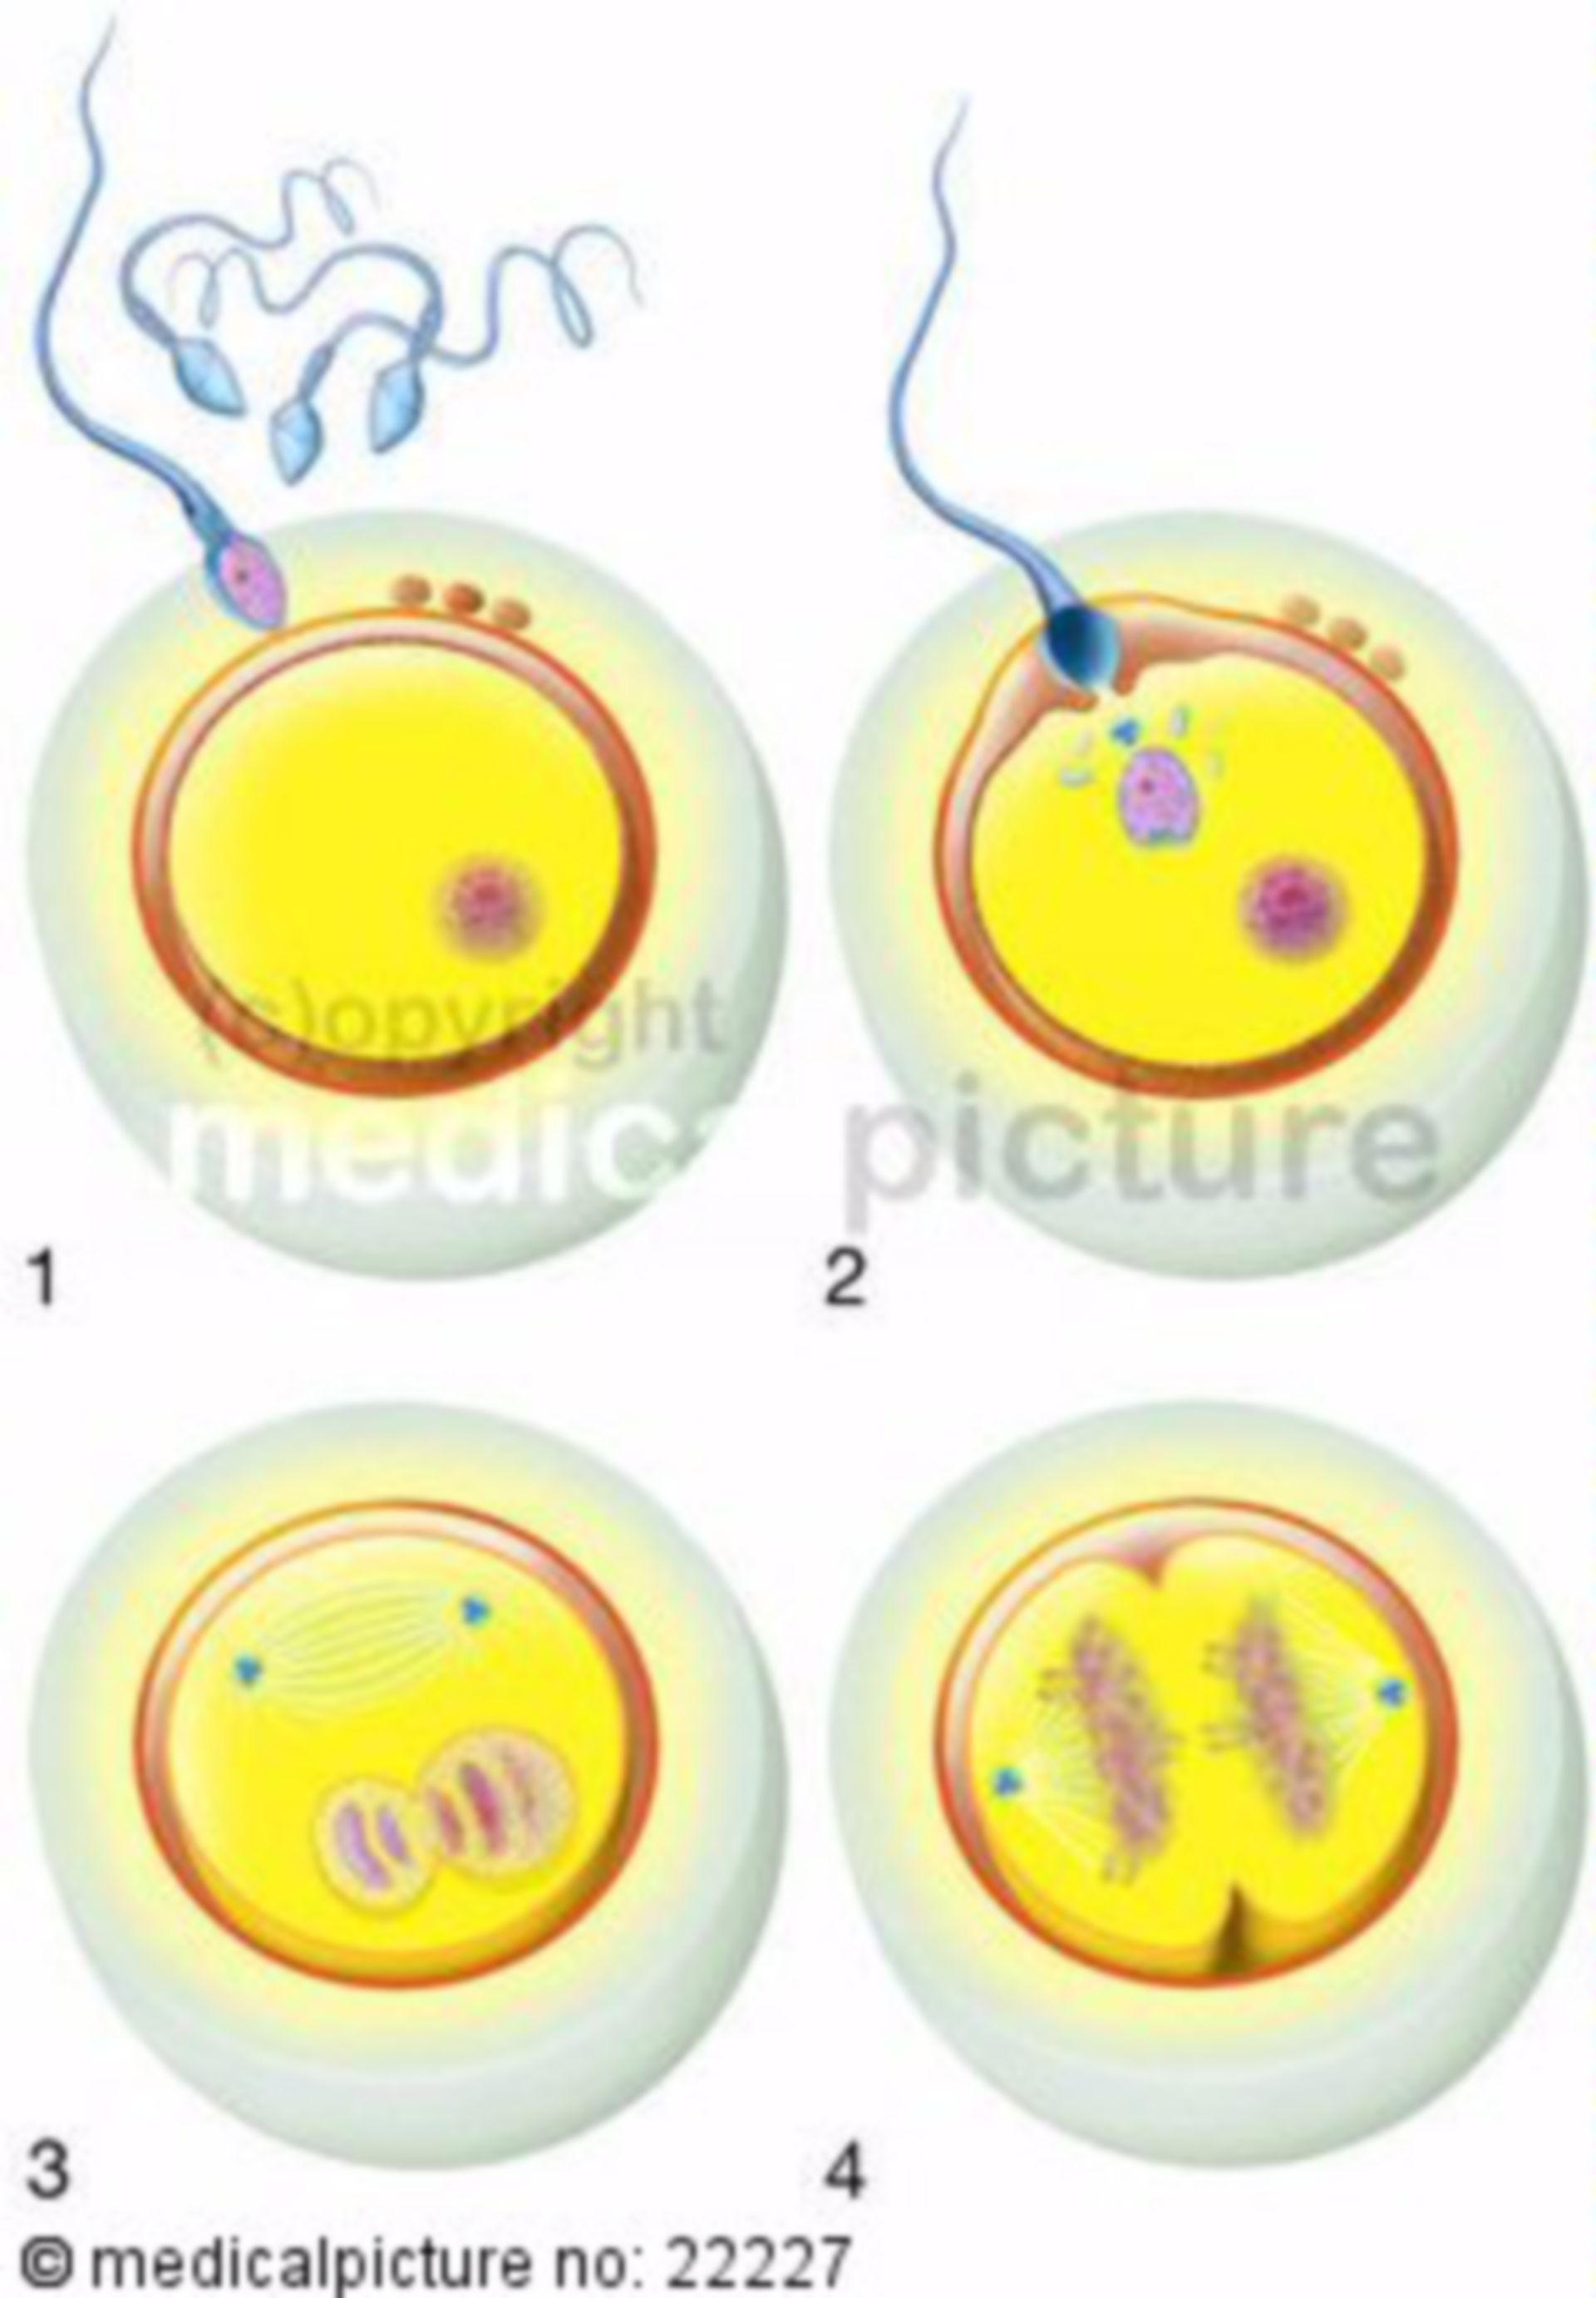 Fertilization of a human oocyte by a sperm